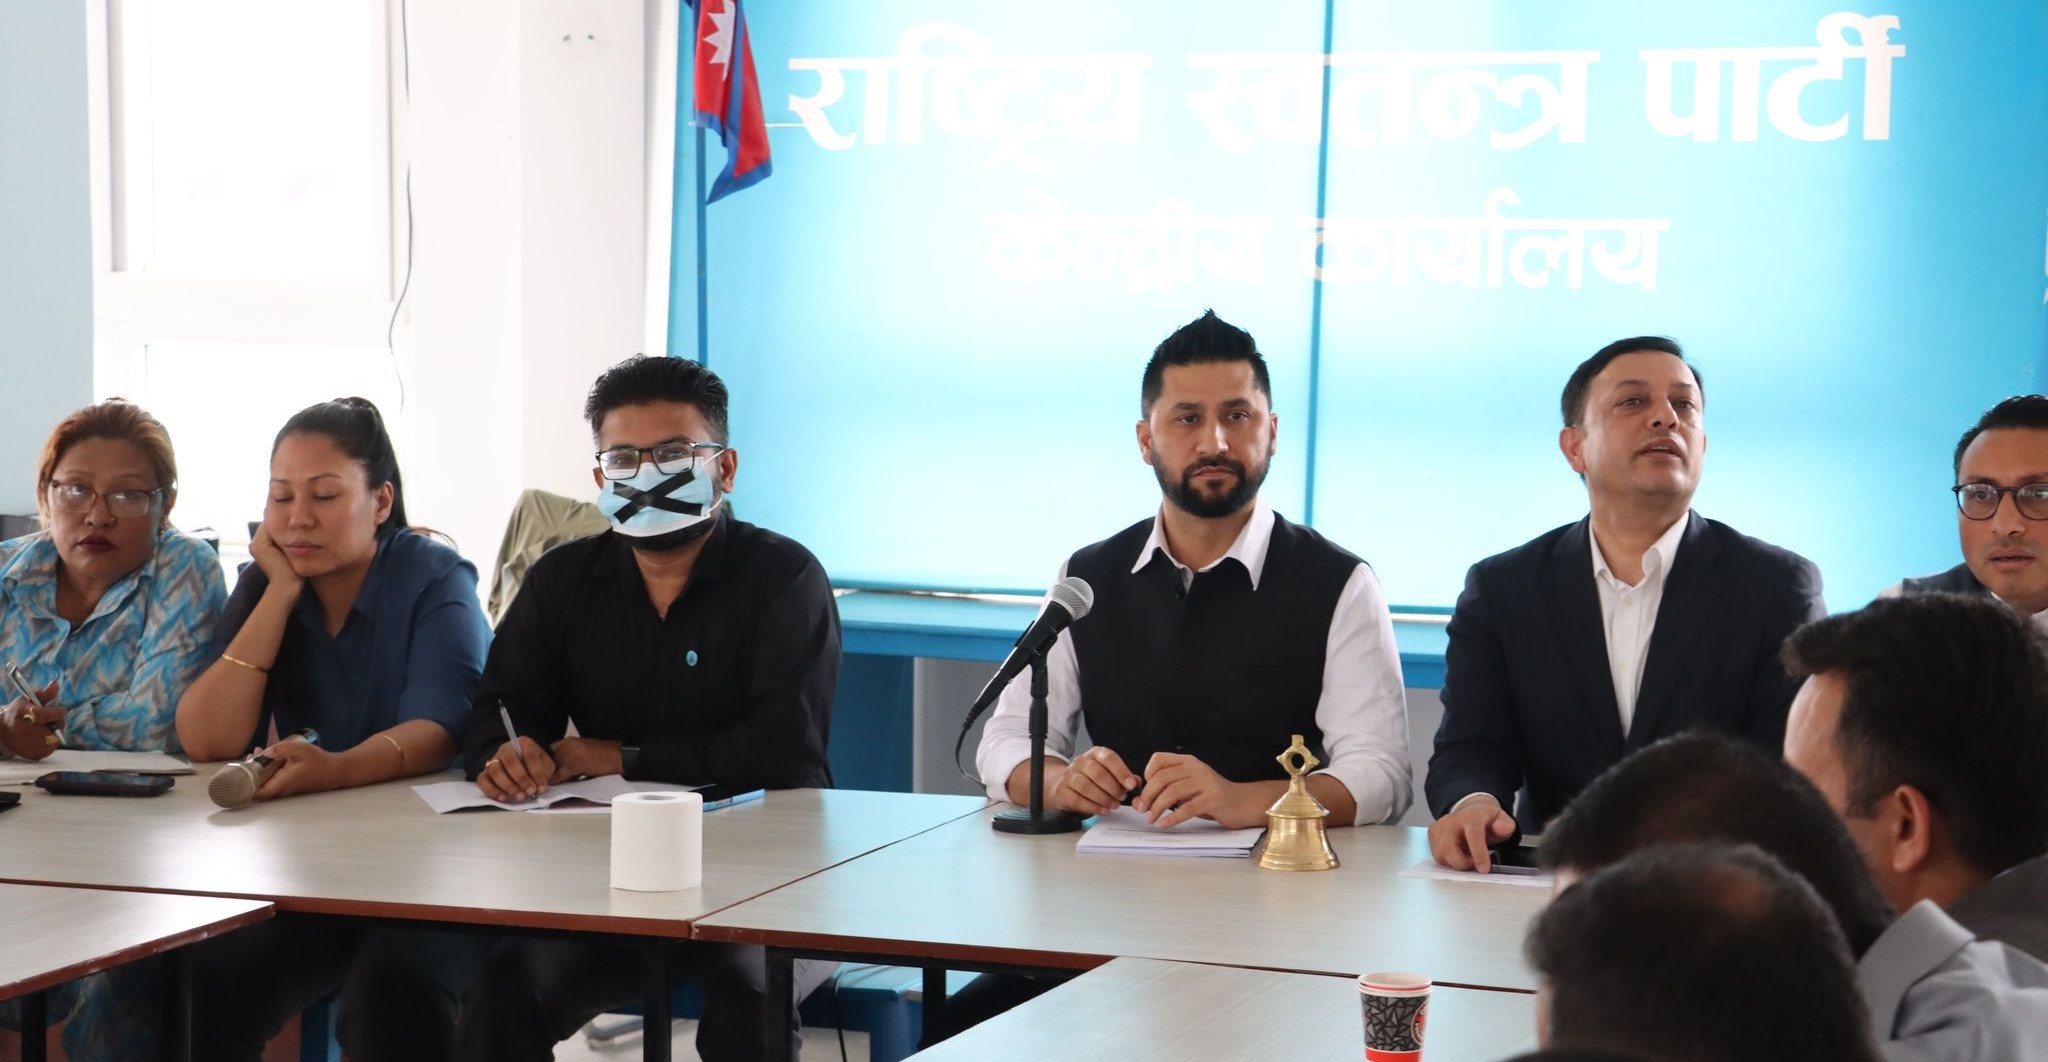 RSP meeting at Chamati, Mukul’s mouth taped shut